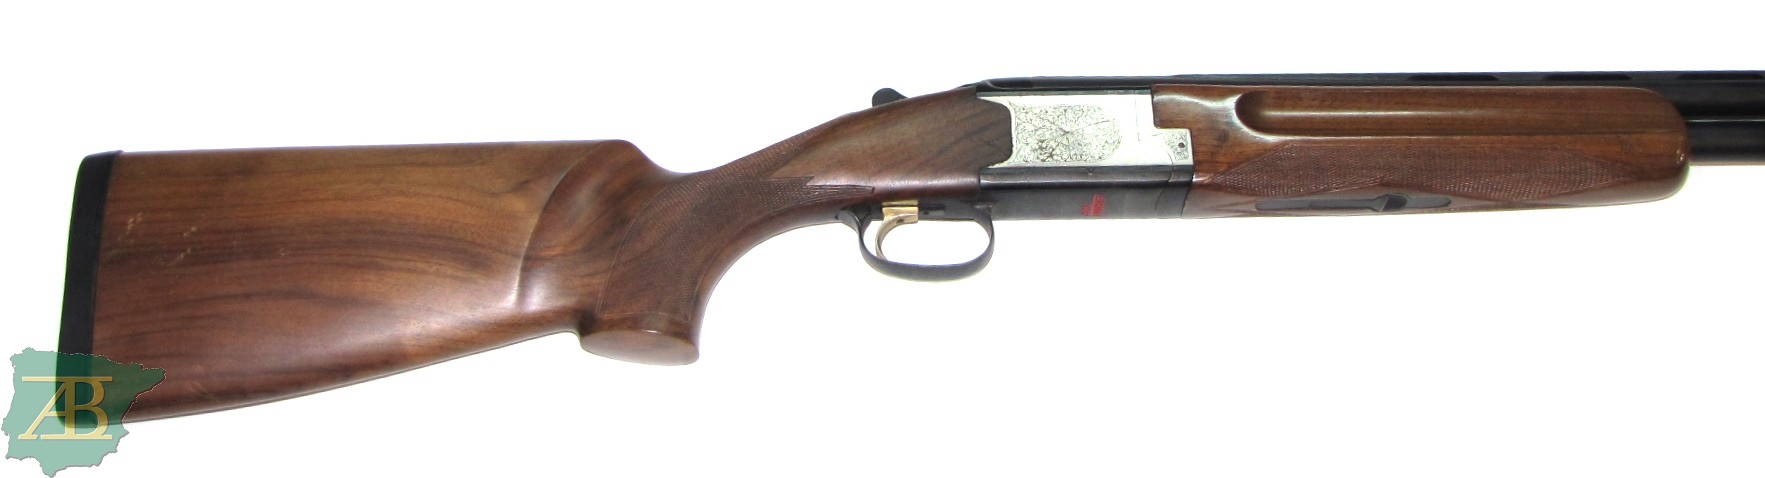 Escopeta superpuesta de TRAP LAURONA Ref 5019-armeriaiberica-3